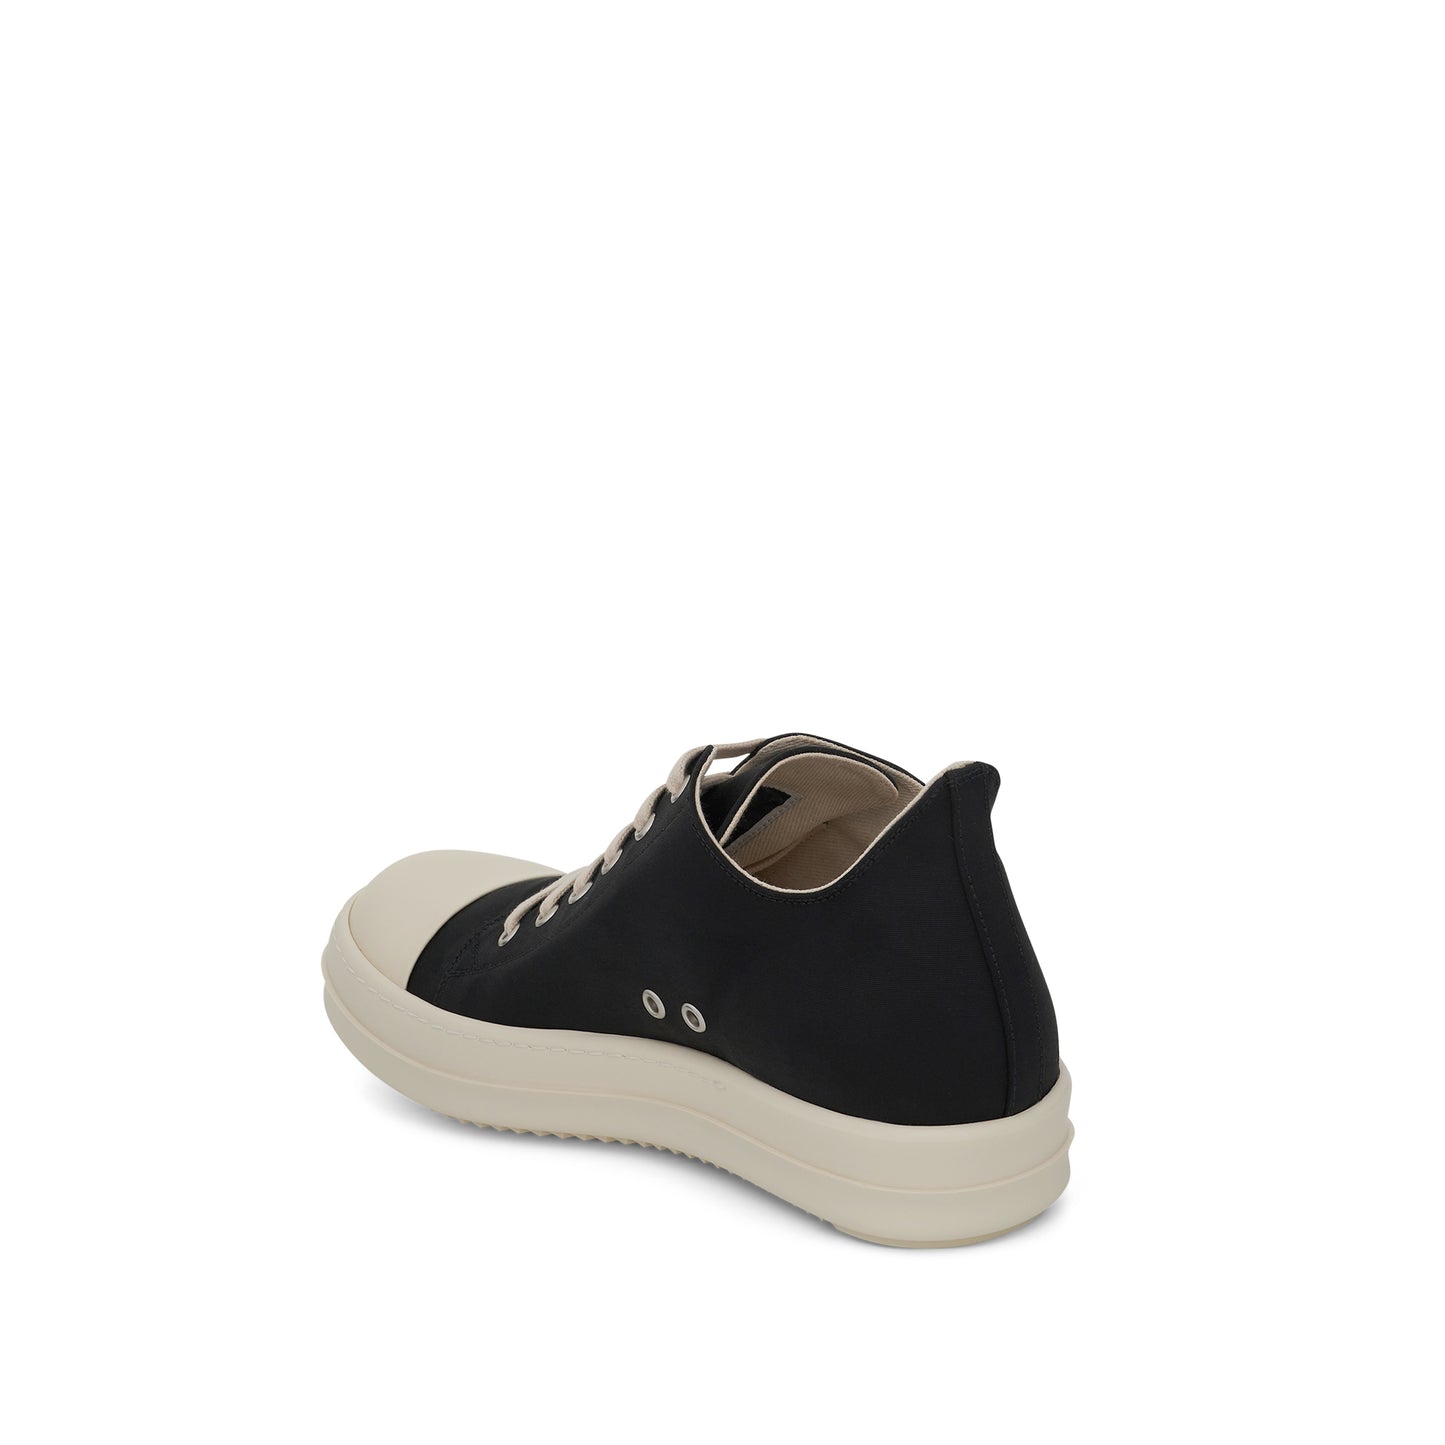 DRKSHDW Ramones Cotton Nylon Low Sneaker in Black/Milk